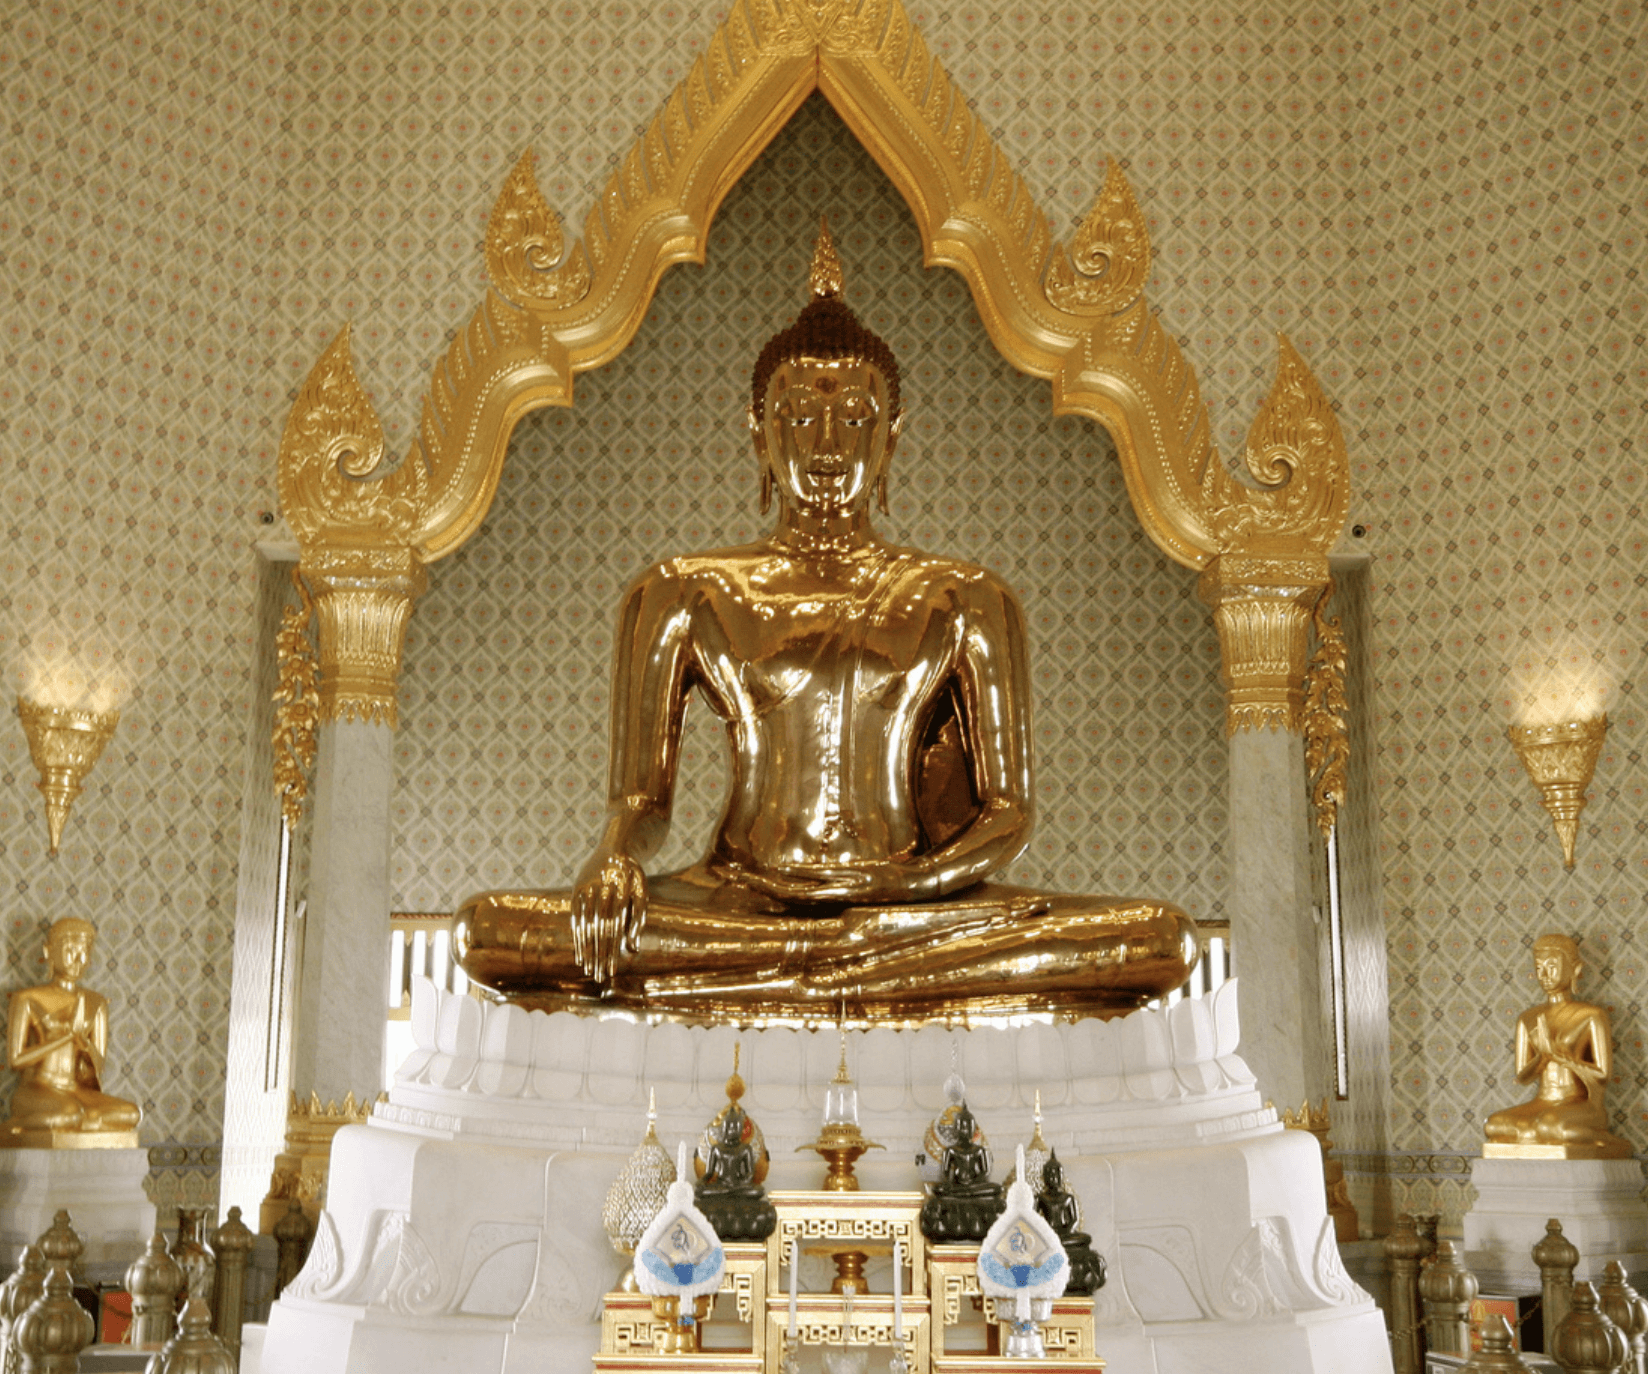 HIDDEN: The fabulously valuable Golden Buddha sat hidden under a coat of clay for centuries